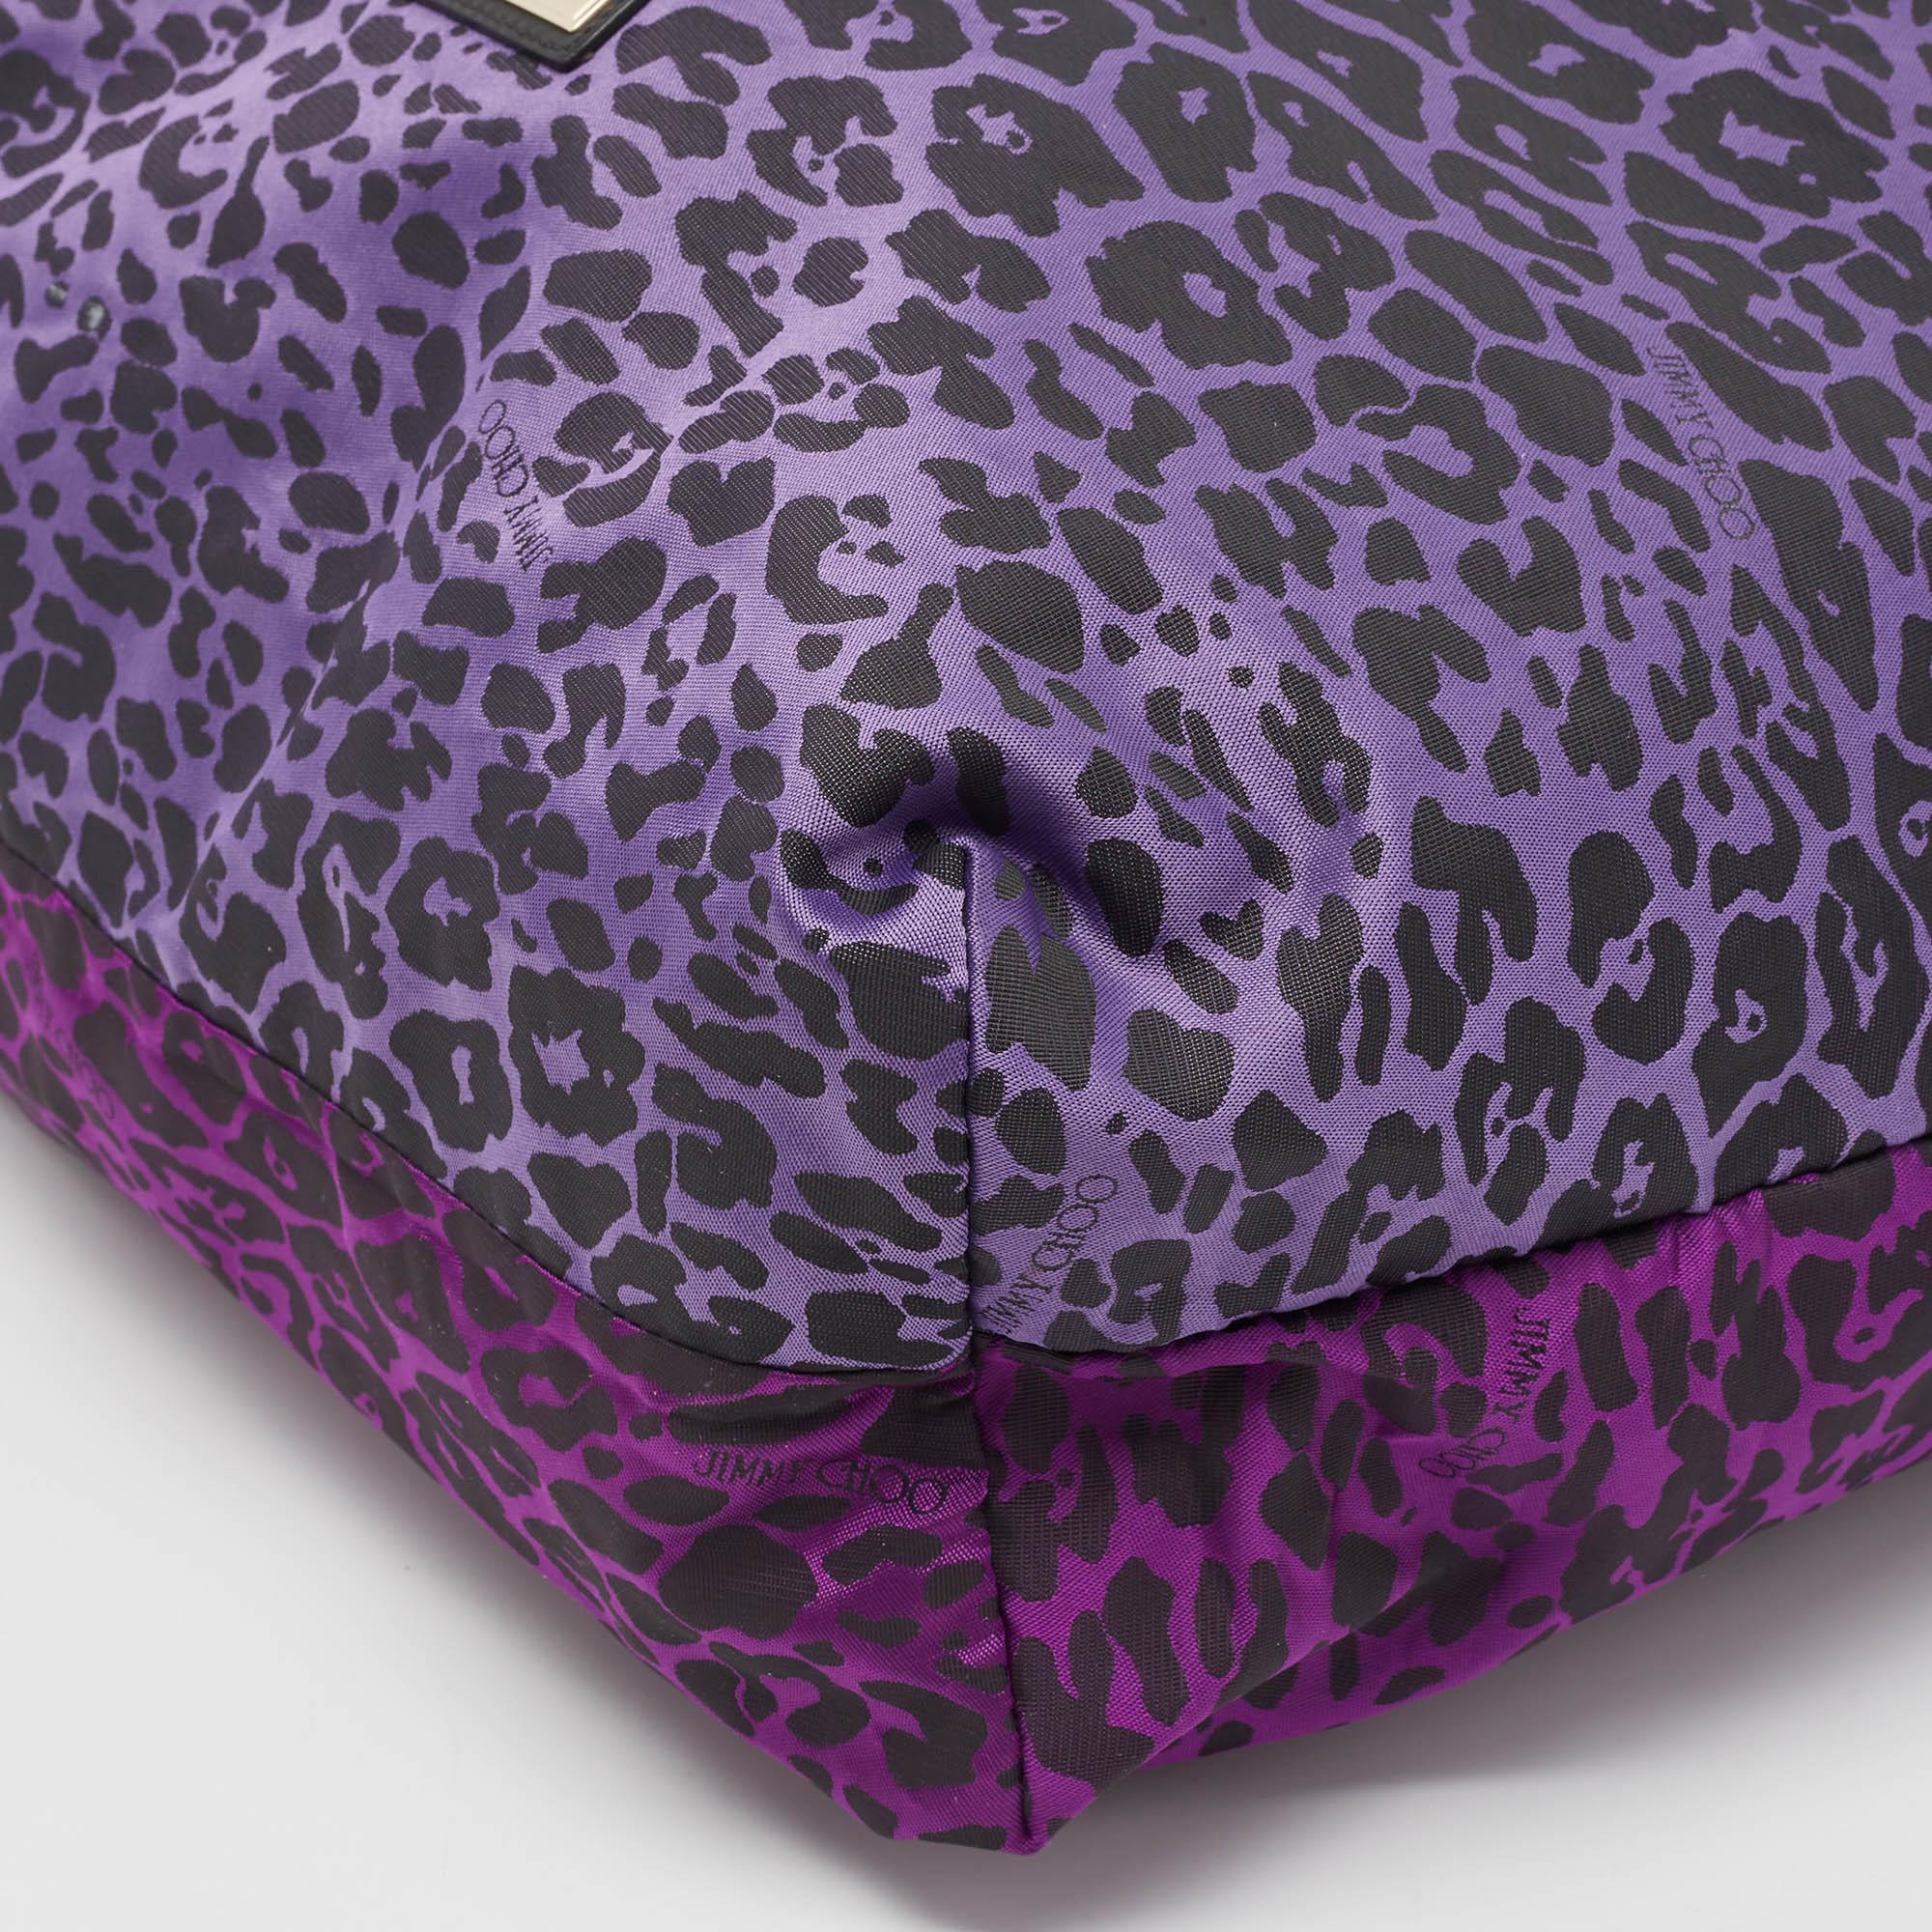 Jimmy Choo Purple/Black Leopard Print Fabric Zip Shopper Tote For Sale 2